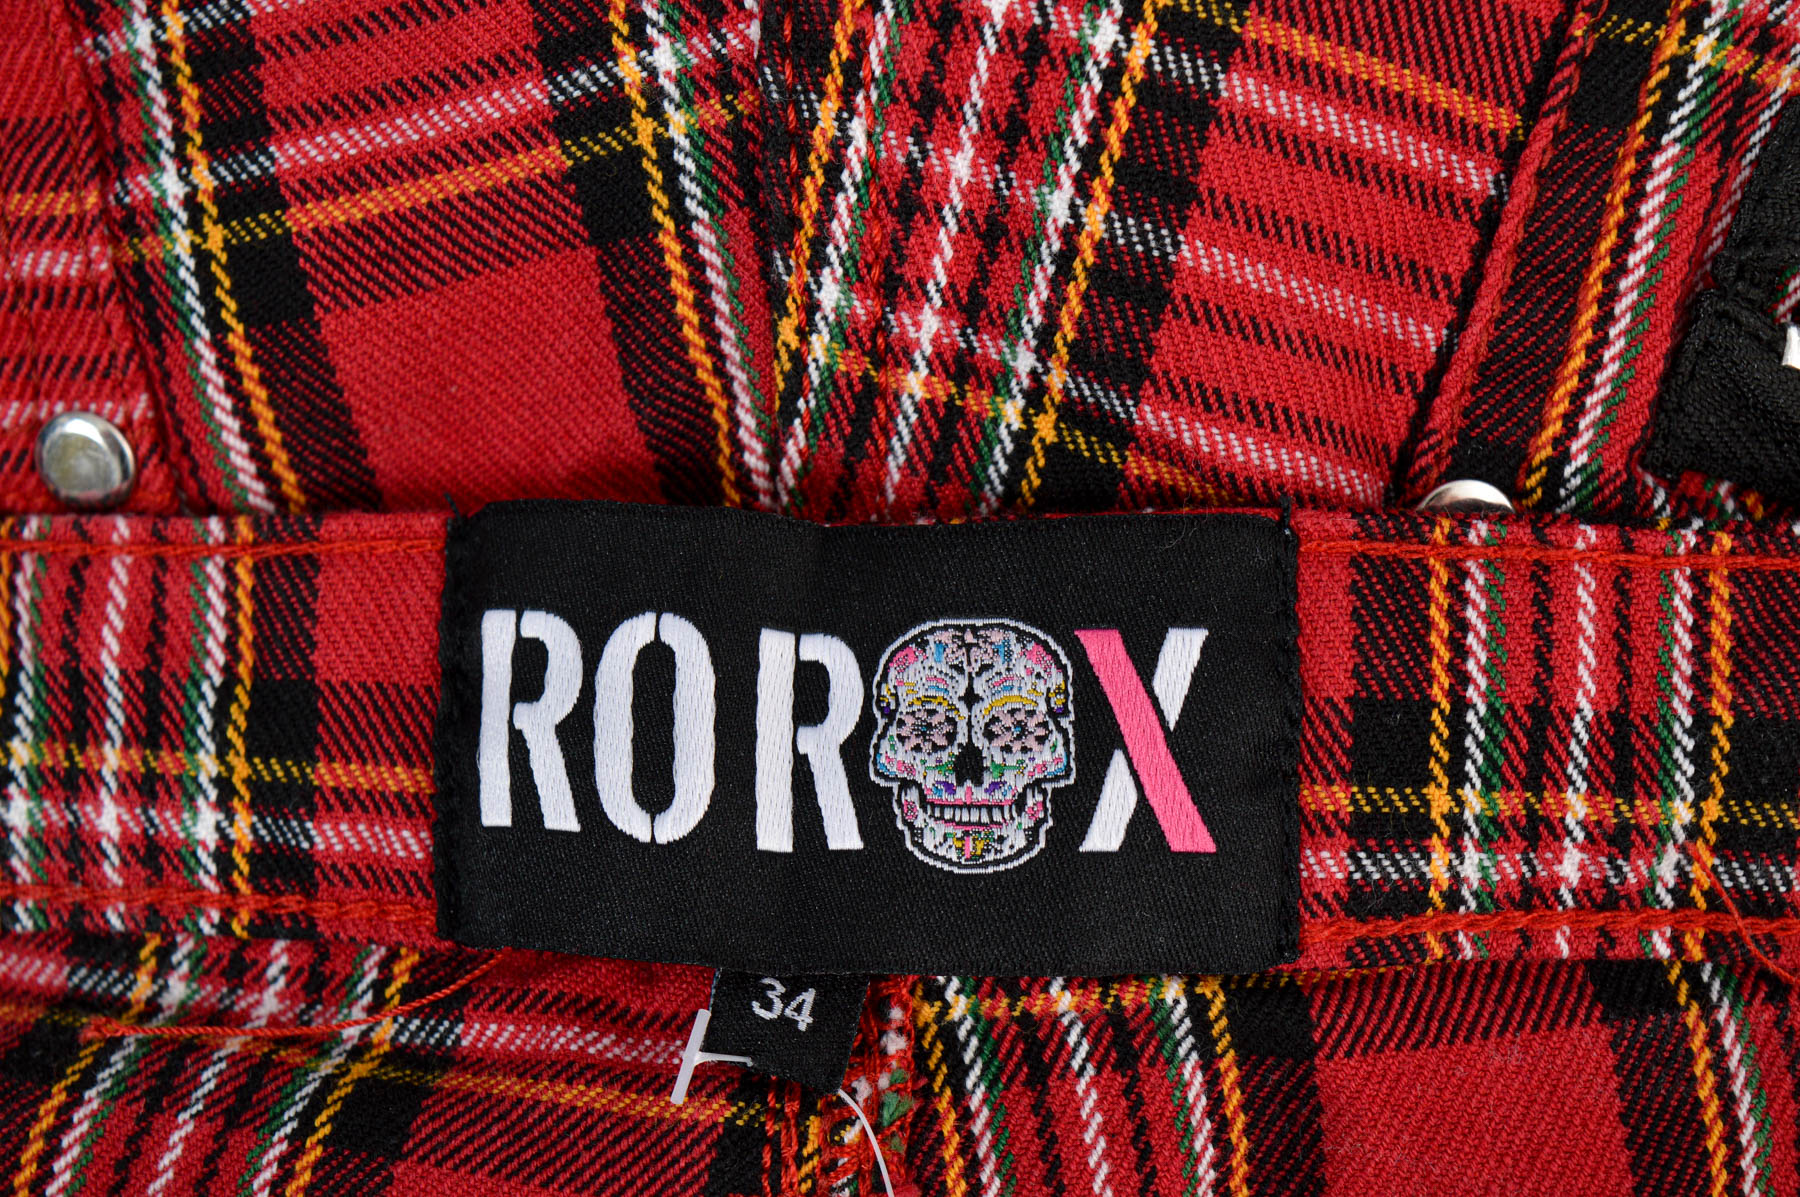 Men's trousers - Ro Rox - 2